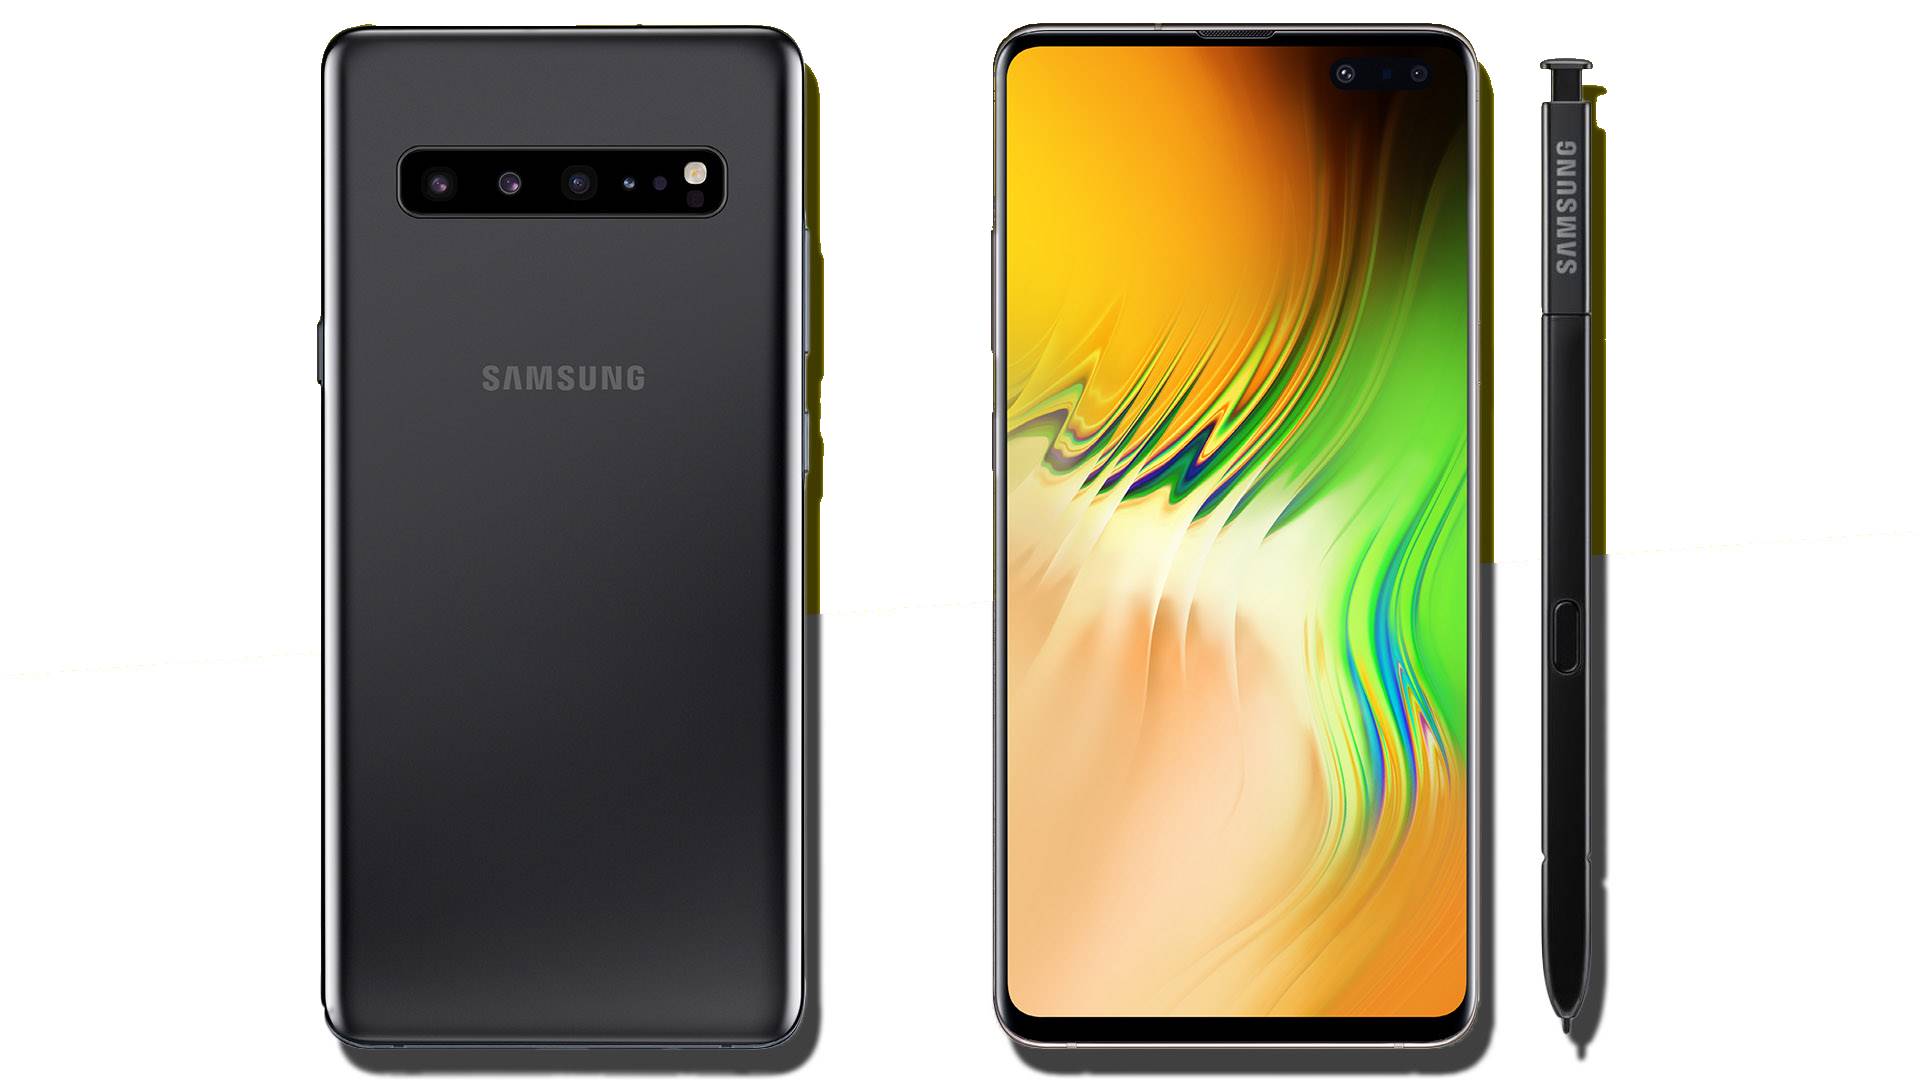 https://www.planet-sansfil.com/wp-content/uploads/2019/07/Samsung-Galaxy-Note-10.jpg